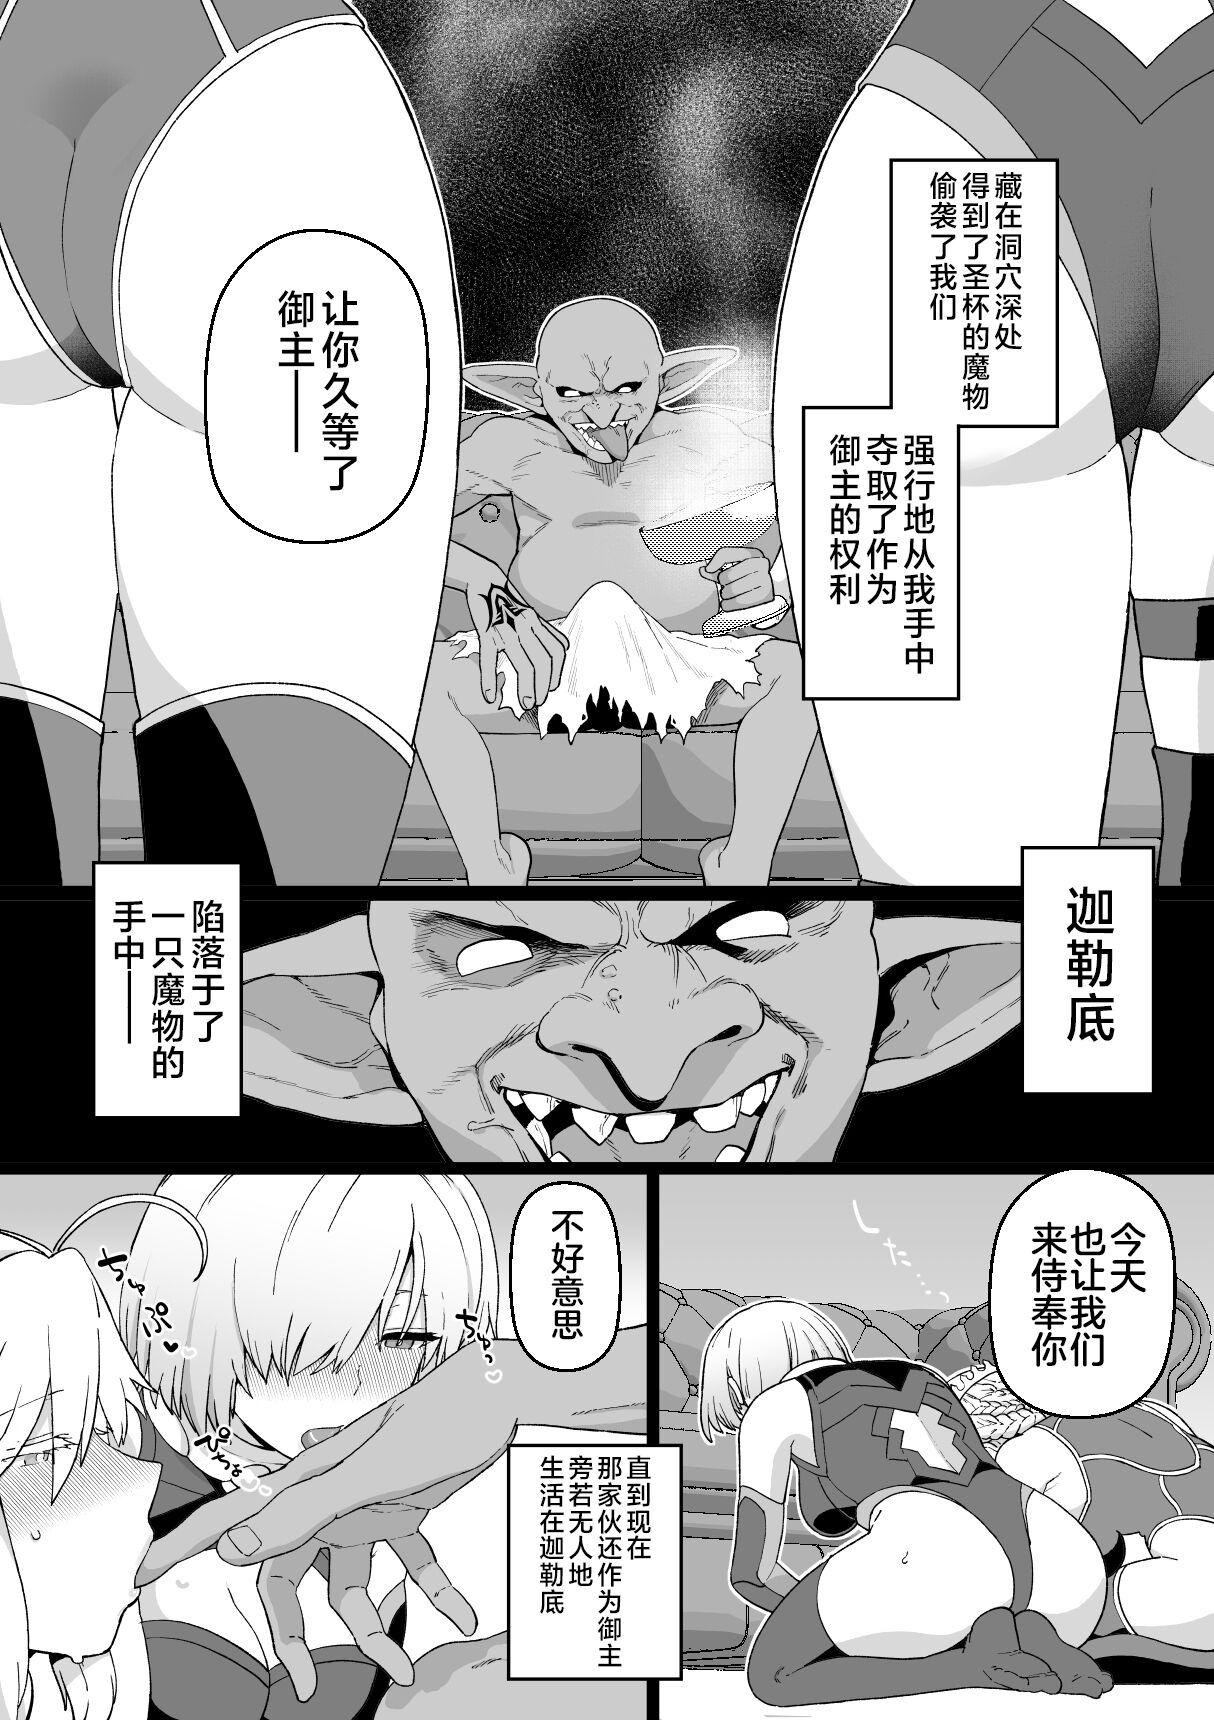 Groupsex Artoria to Mash, Goblin Kan Manga - Fate grand order Buttfucking - Page 2